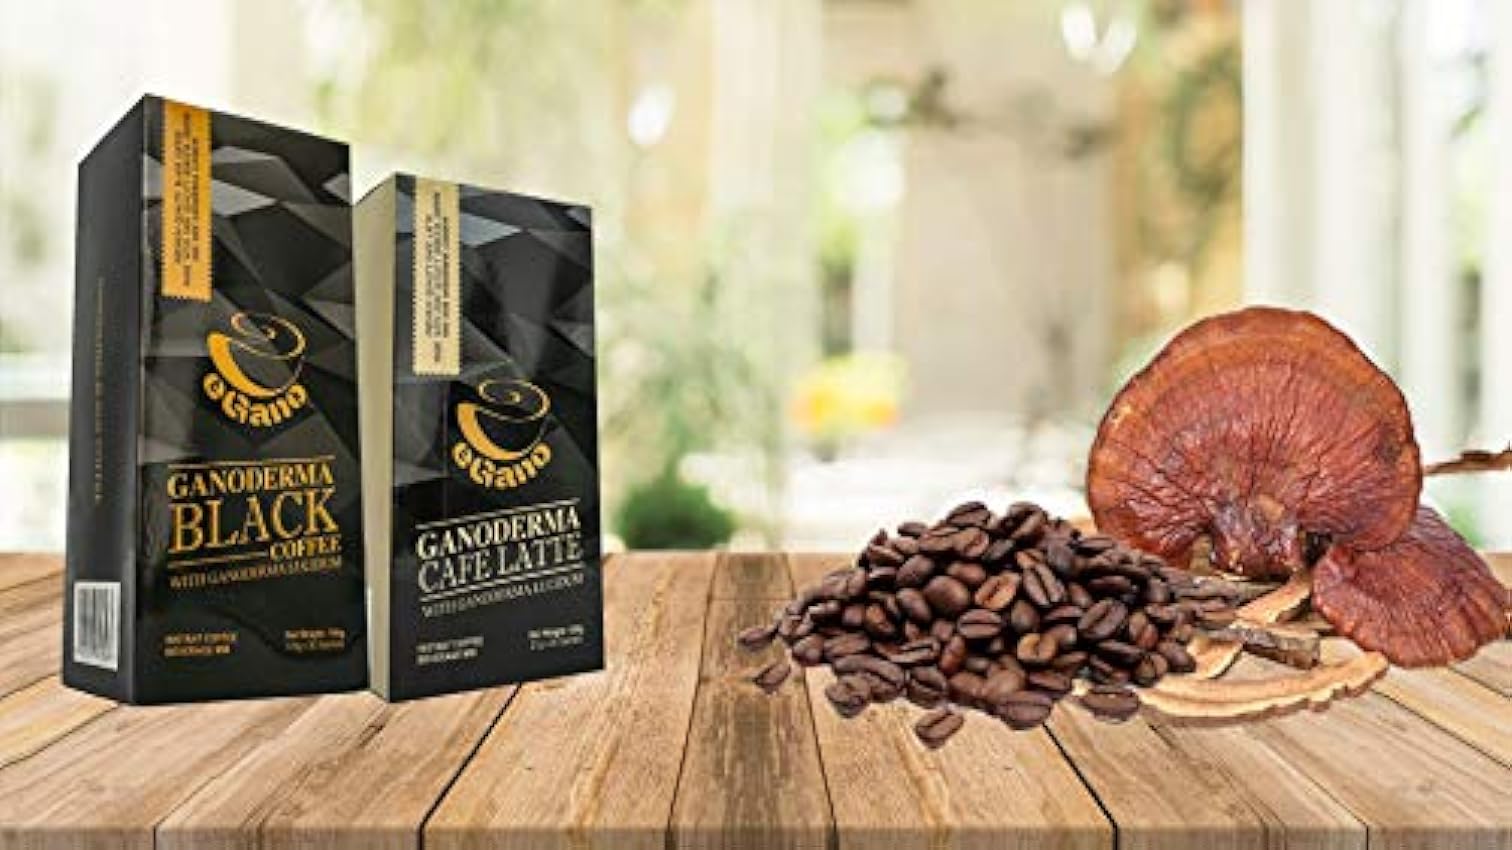 eGano 3 cajas de café instantáneo Ganoderma Cafe Latte con extracto de Ganoderma Lucidum (21 g x 20 sobres / caja) OSCunDGl